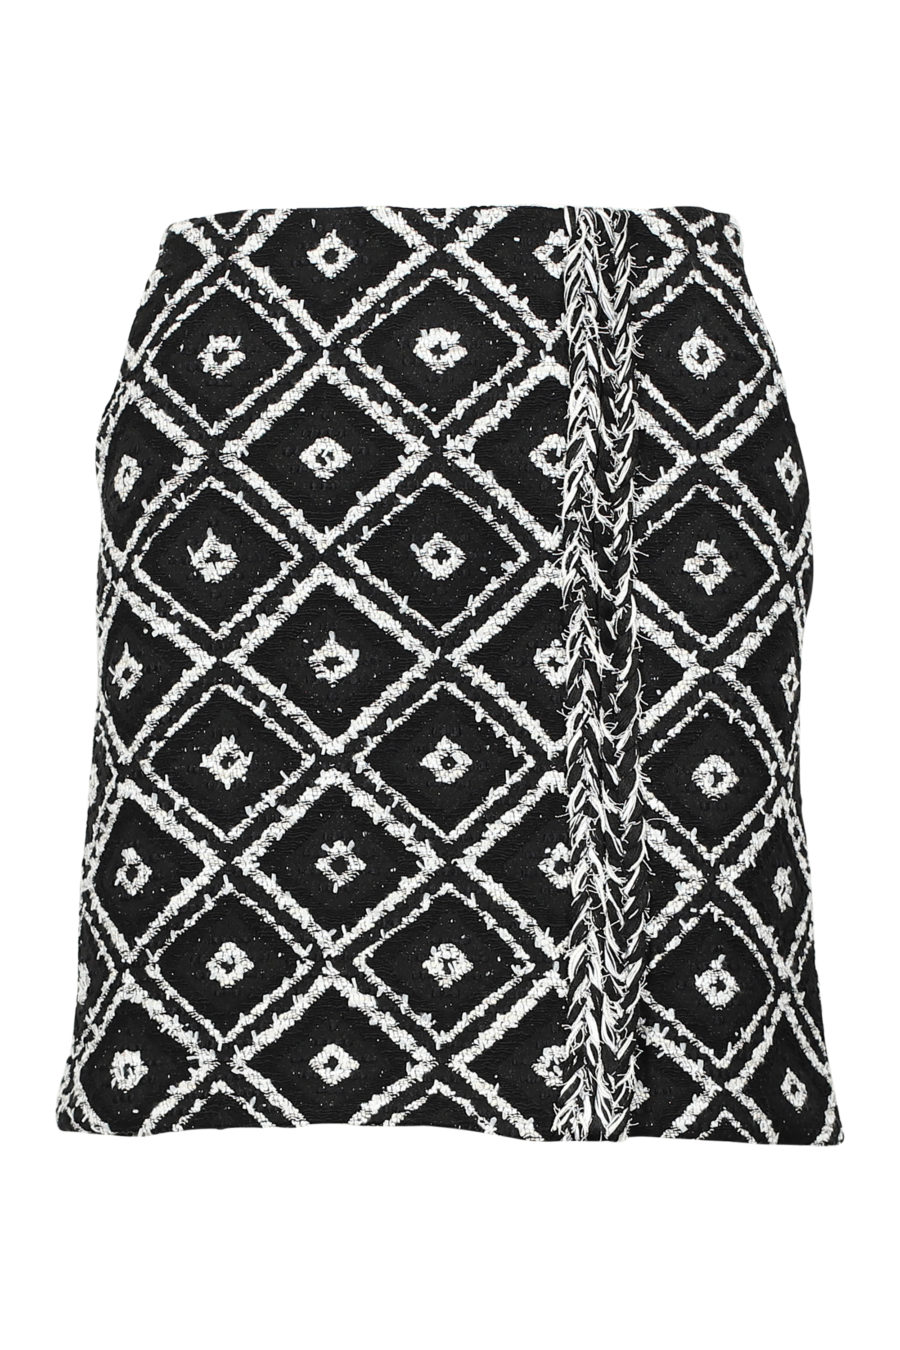 Black and white geometric skirt "Boucle" - IMG 3177